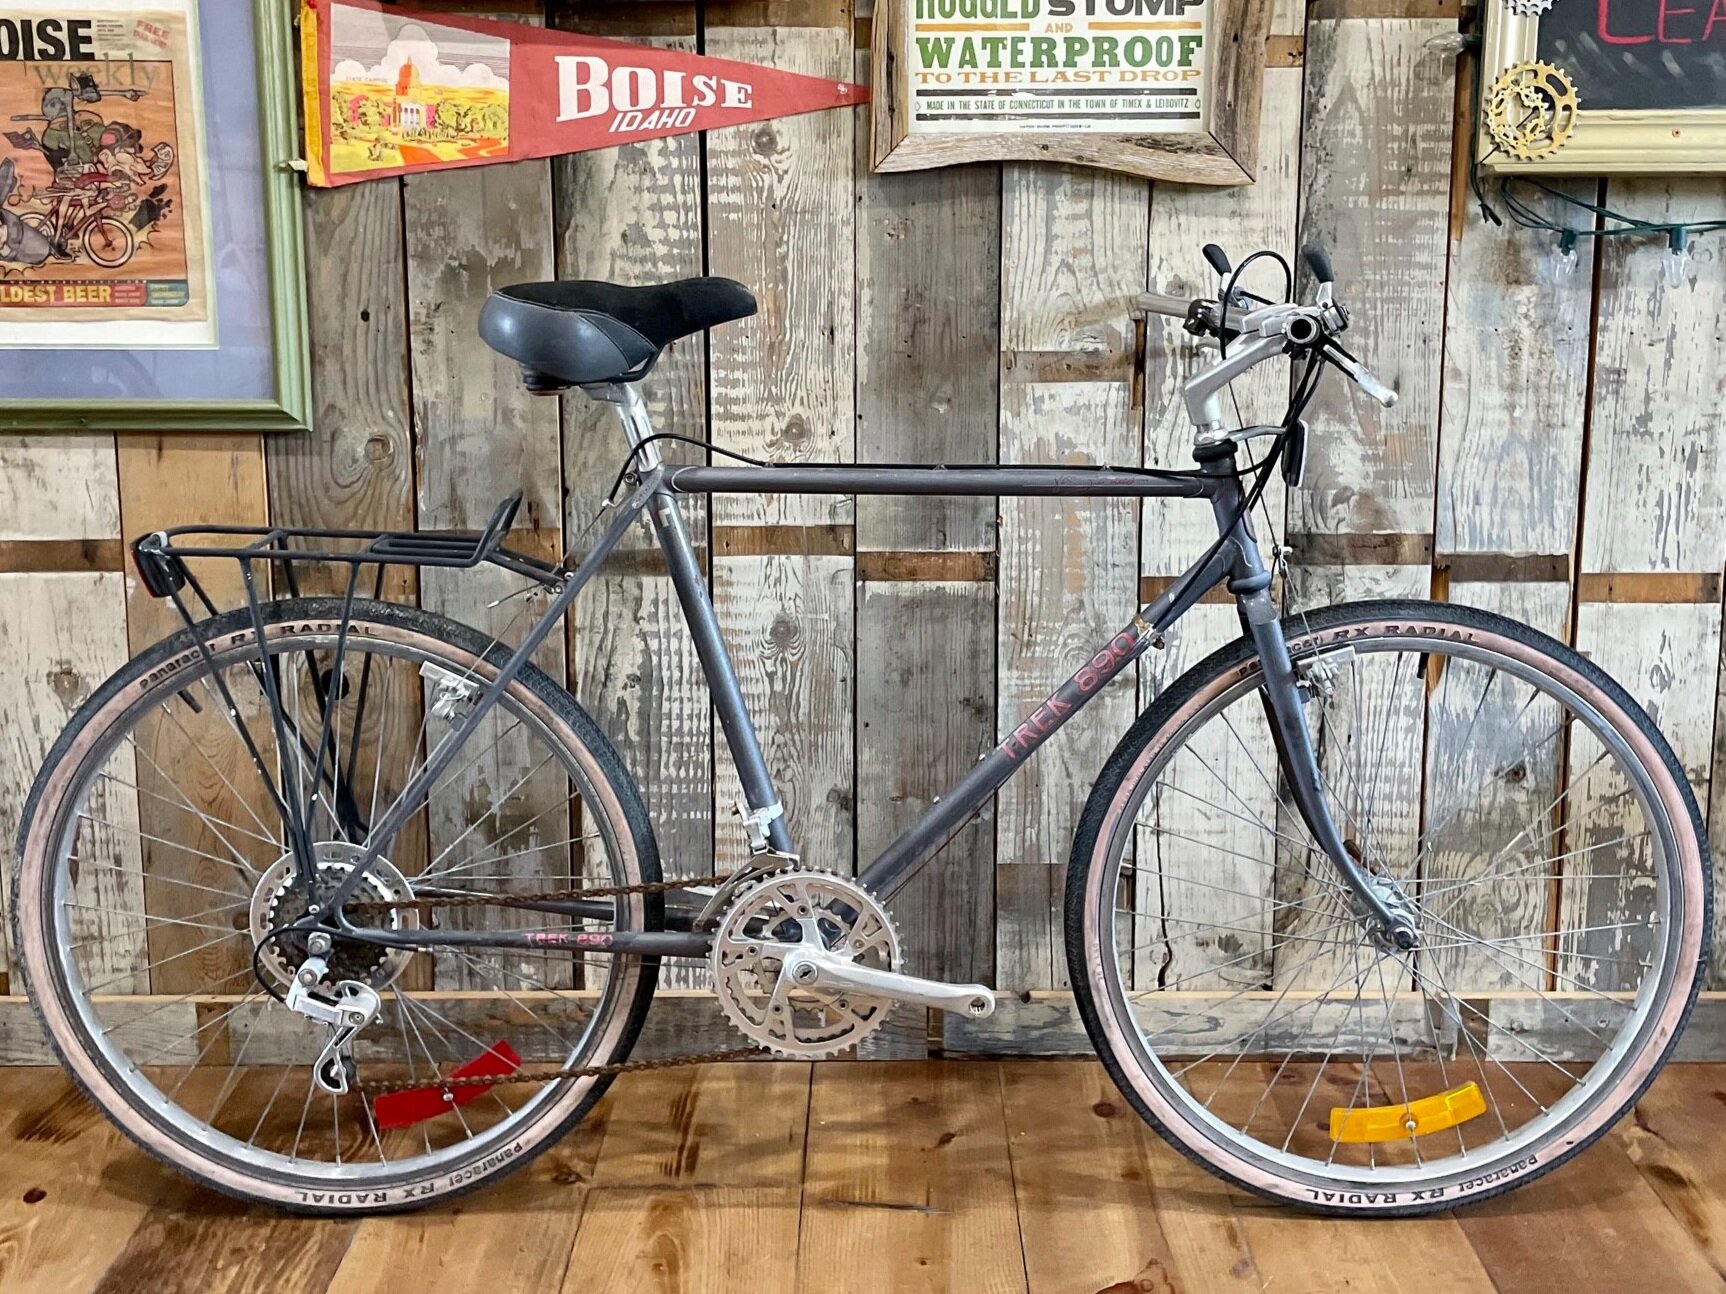 PRESERVATION BICYCLE #30 1984 Trek 890! Reboot — Boise Bicycle Project